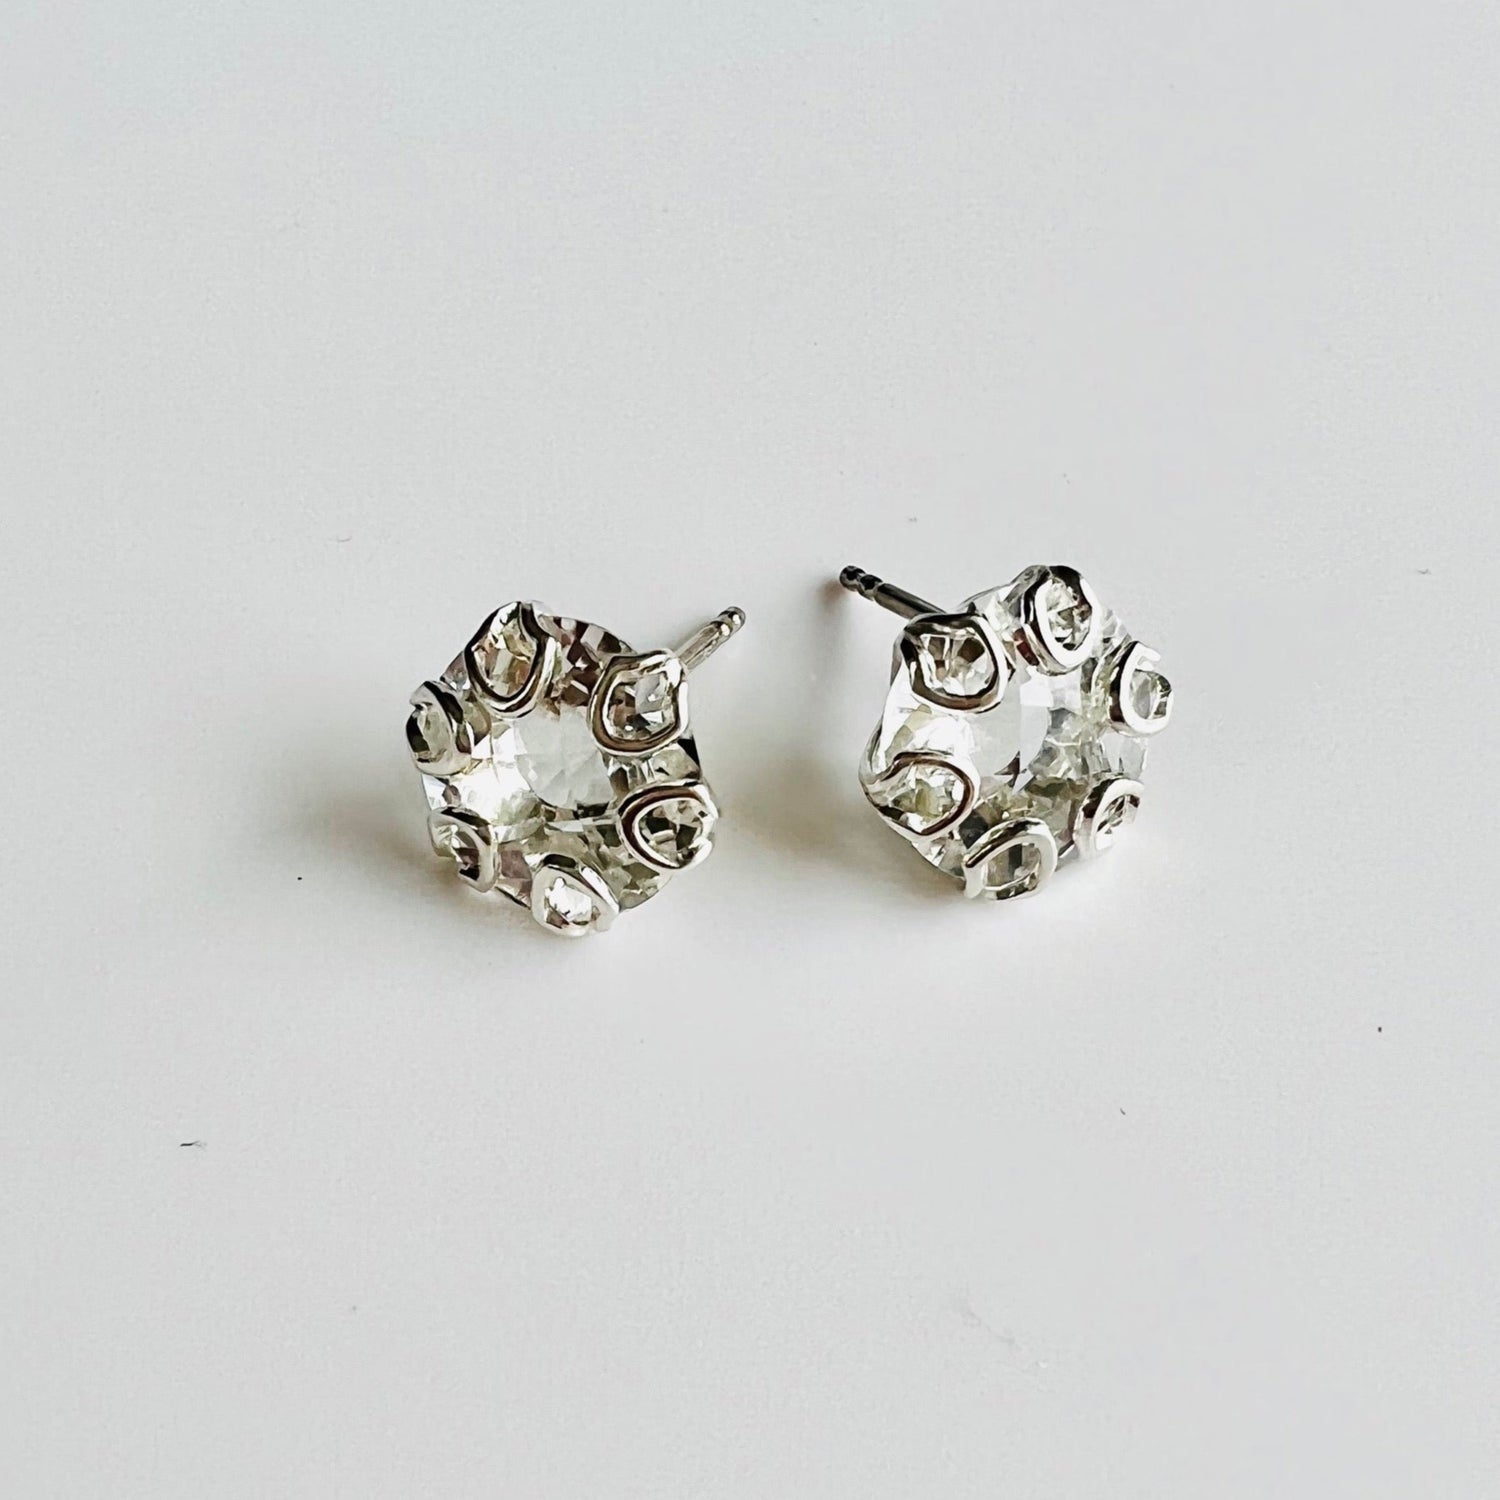 Poppy Earrings in Sterling Silver and White Topaz by Hannah Daye & CO